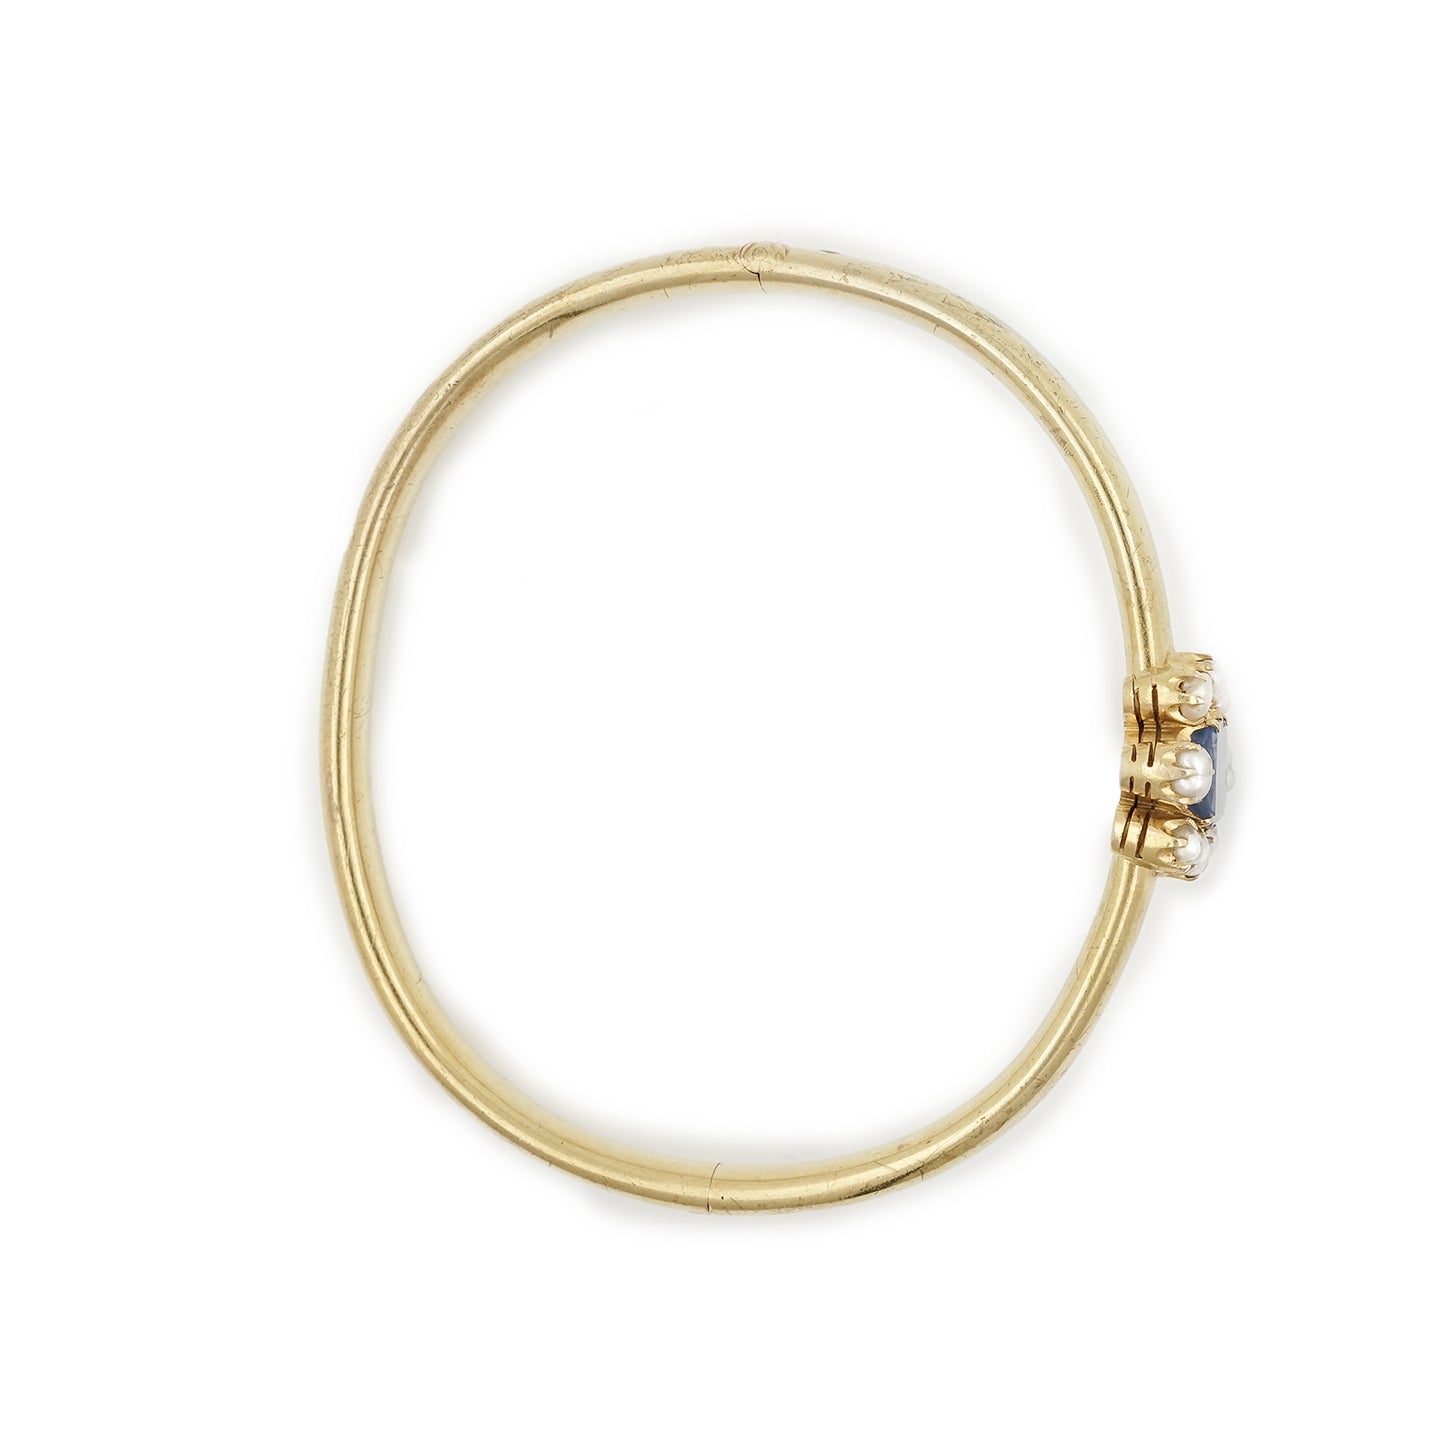 Bangle Art Deco Topaz Baroque Pearl 750 18K Yellow Gold Women's Jewelry Gold Hoop Bracelet